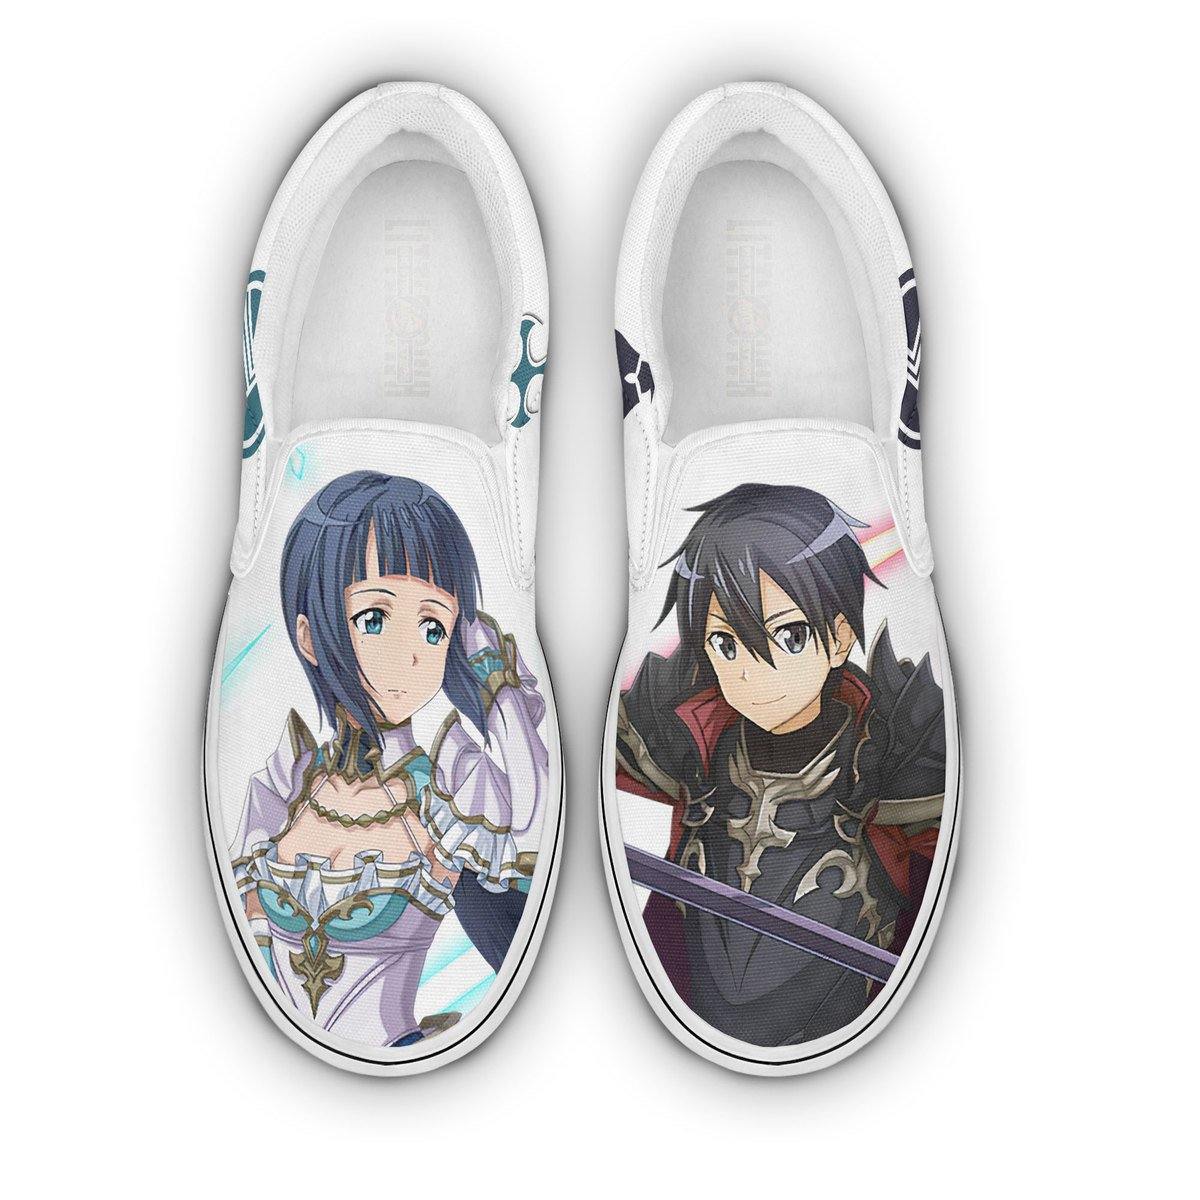 Sword Art Online Sachi And Kirito Shoes Custom Anime Classic Slip-On Sneakers